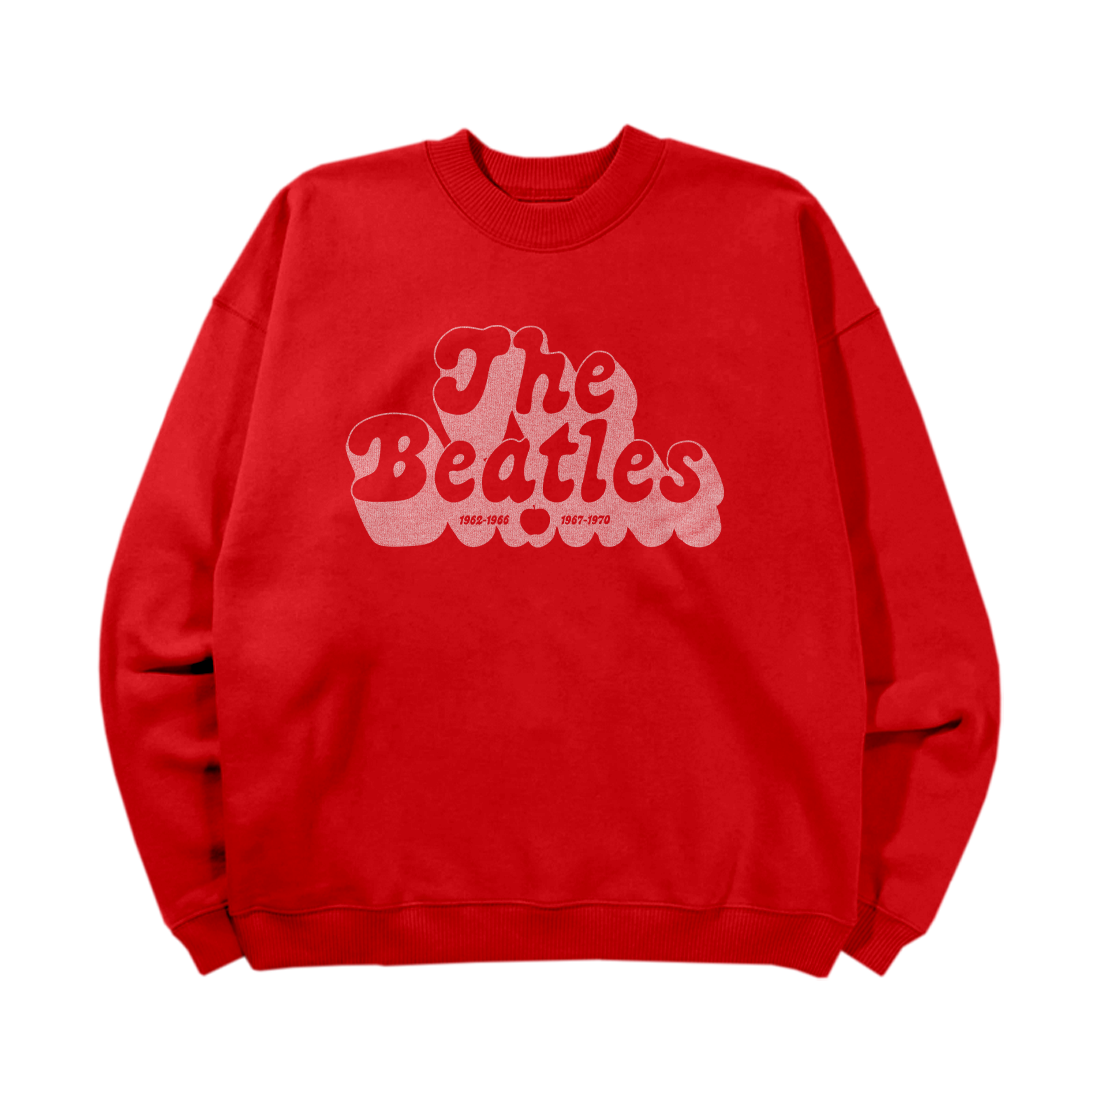 The Beatles - Red Album Crewneck Sweatshirt